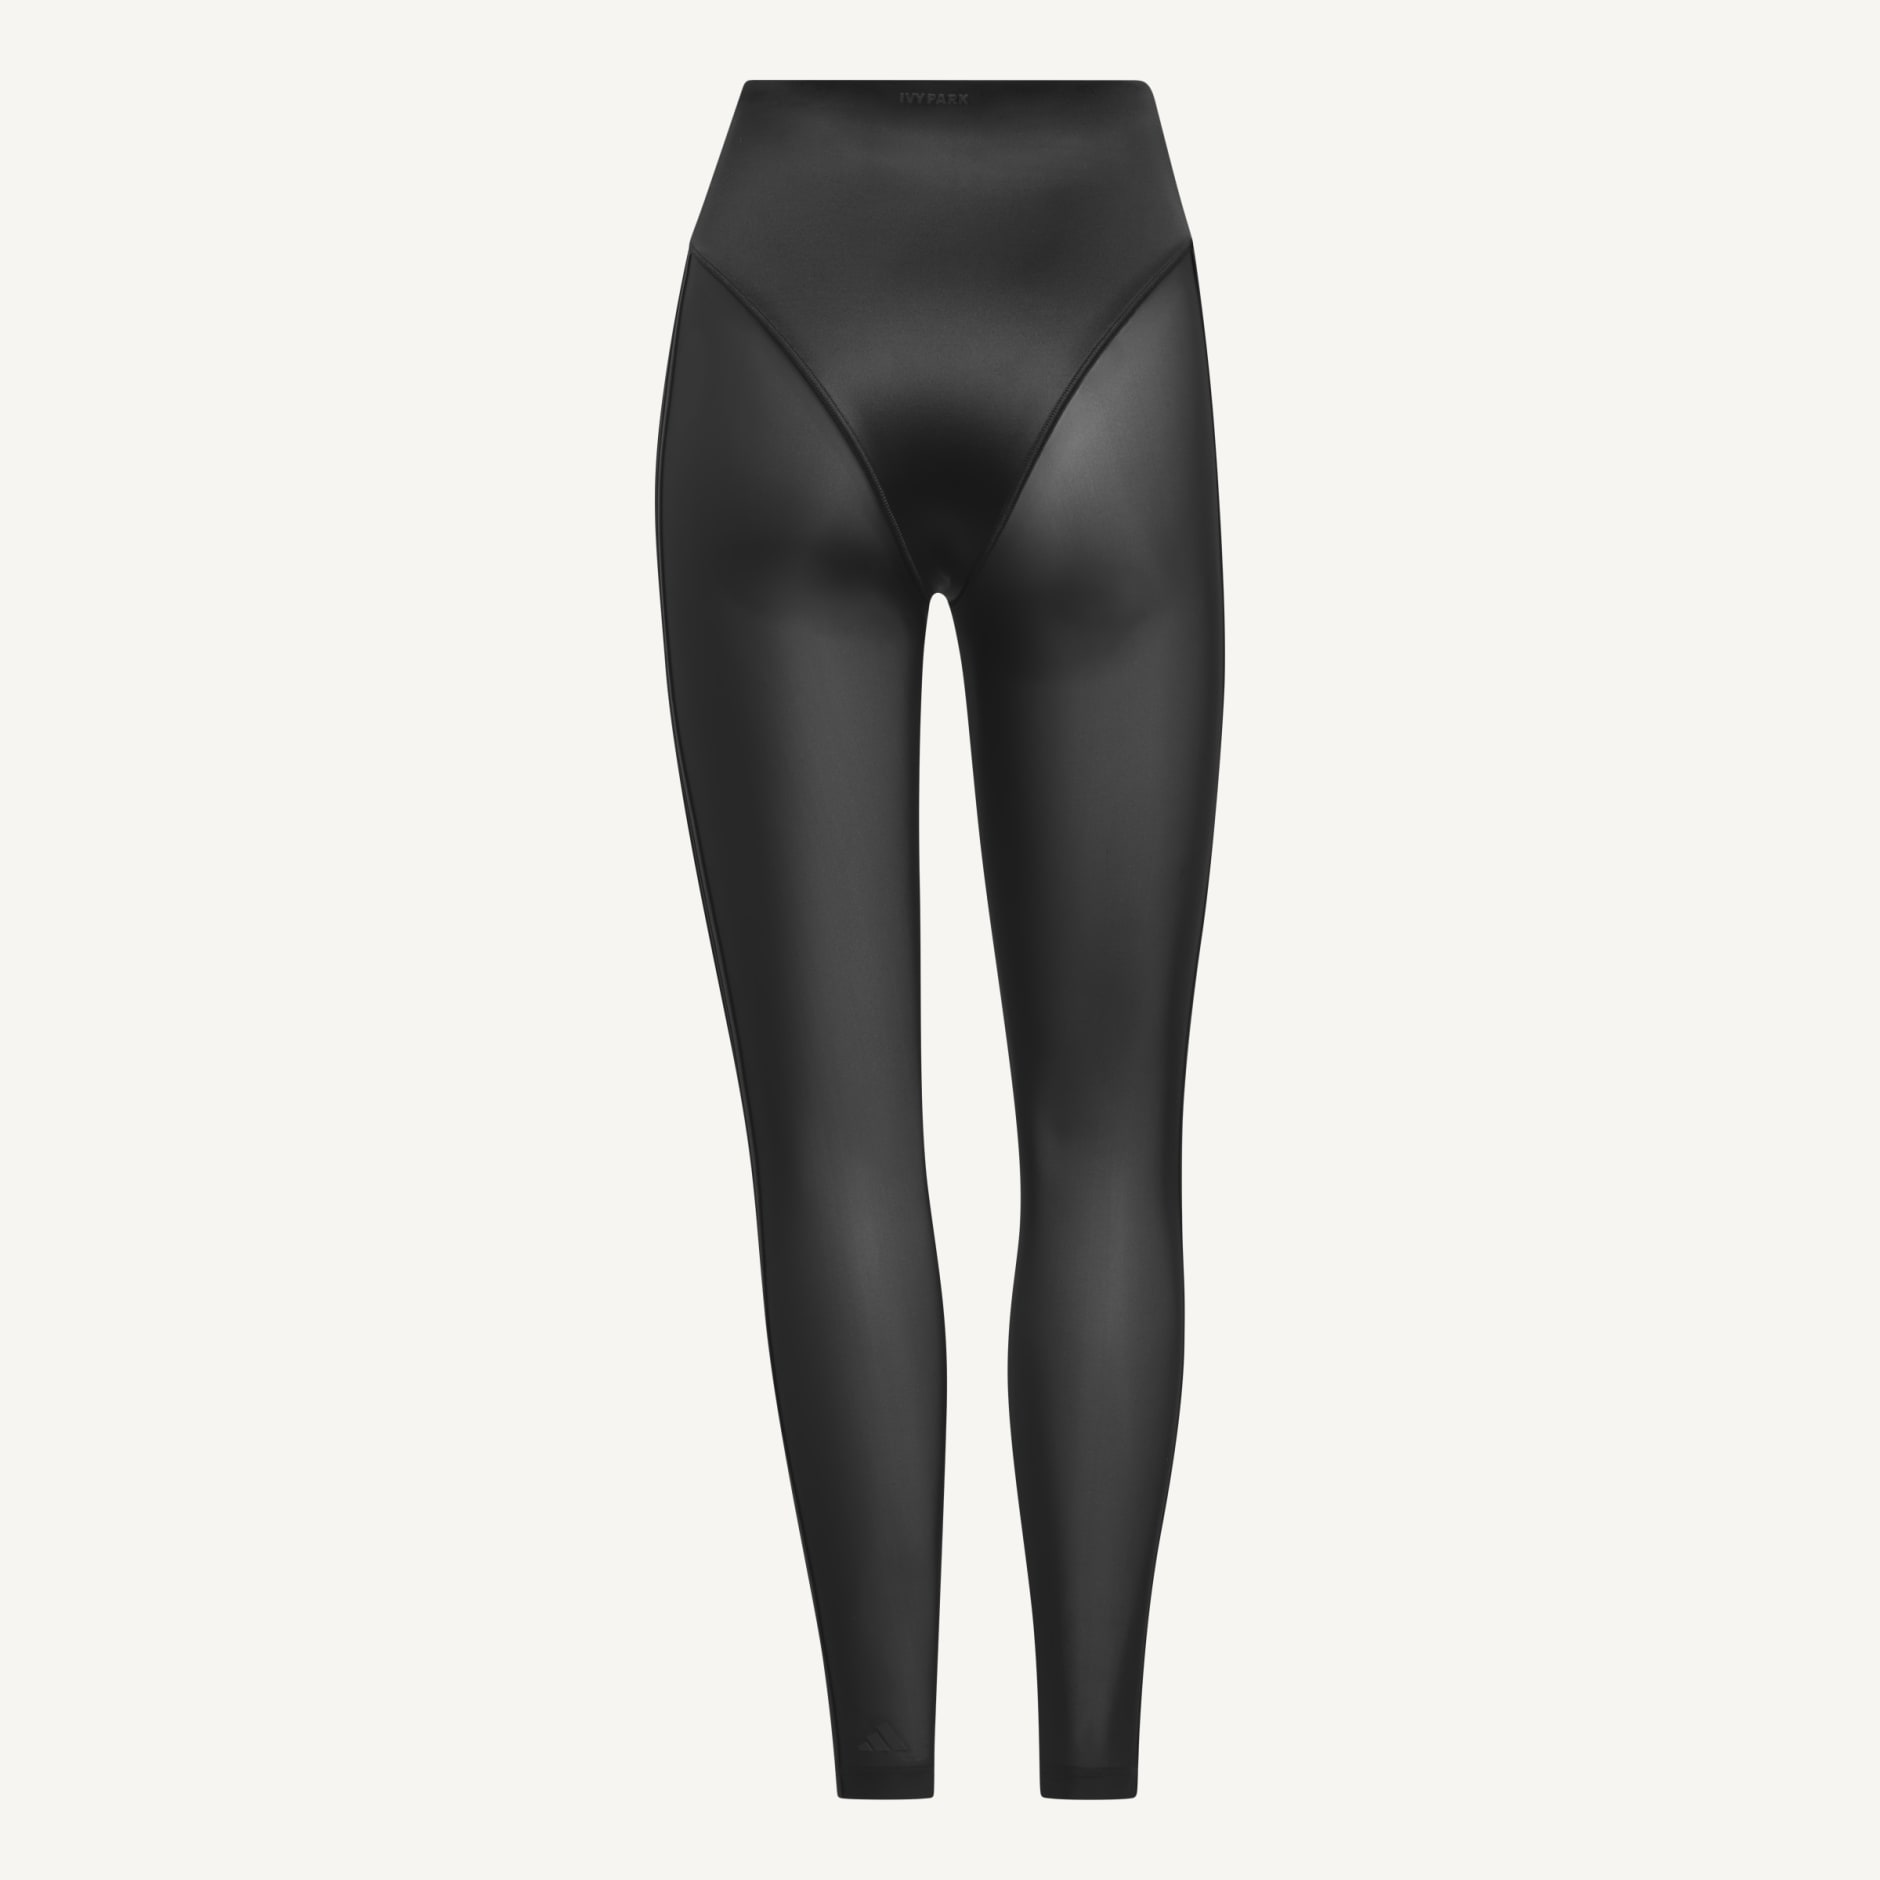 Women's Clothing - IVY PARK Shiny Panty Mesh Tights - Black